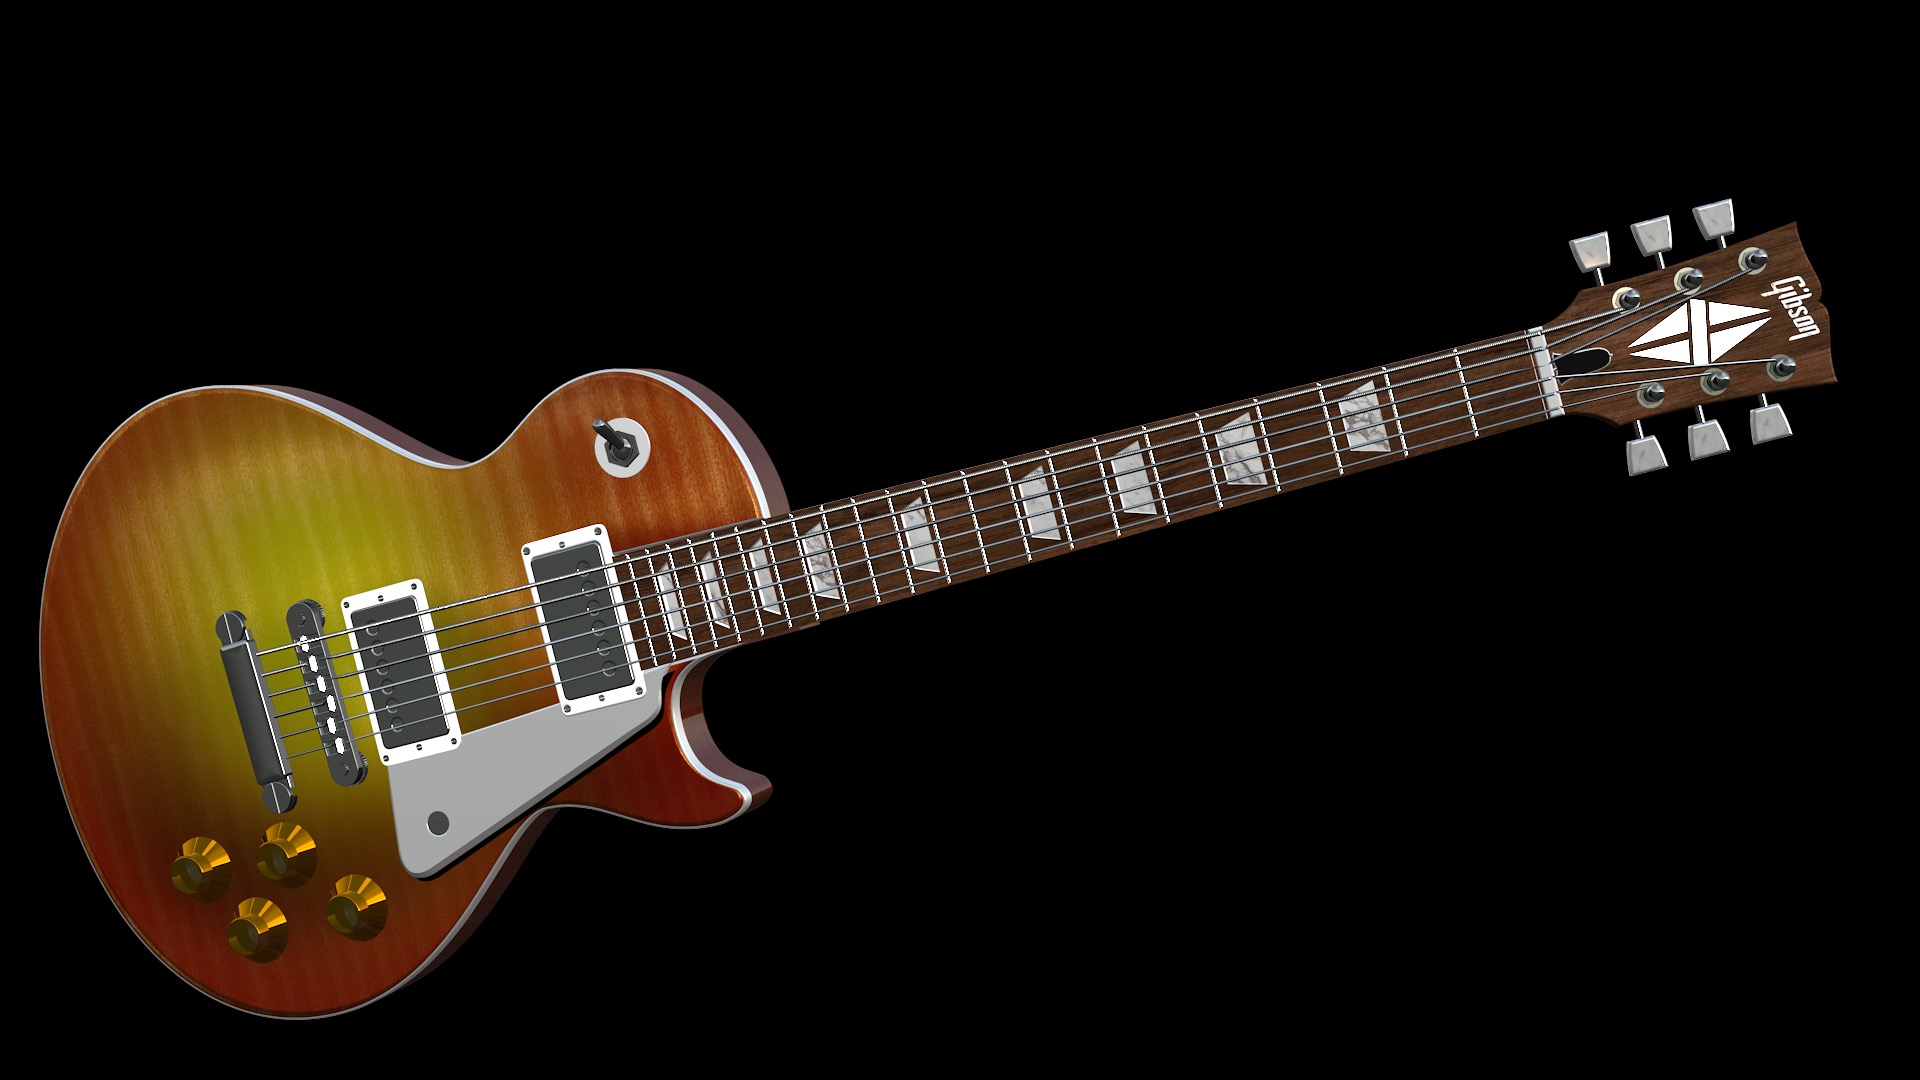 Les Paul guitar 3D Model and generator for Final Cut Pro X